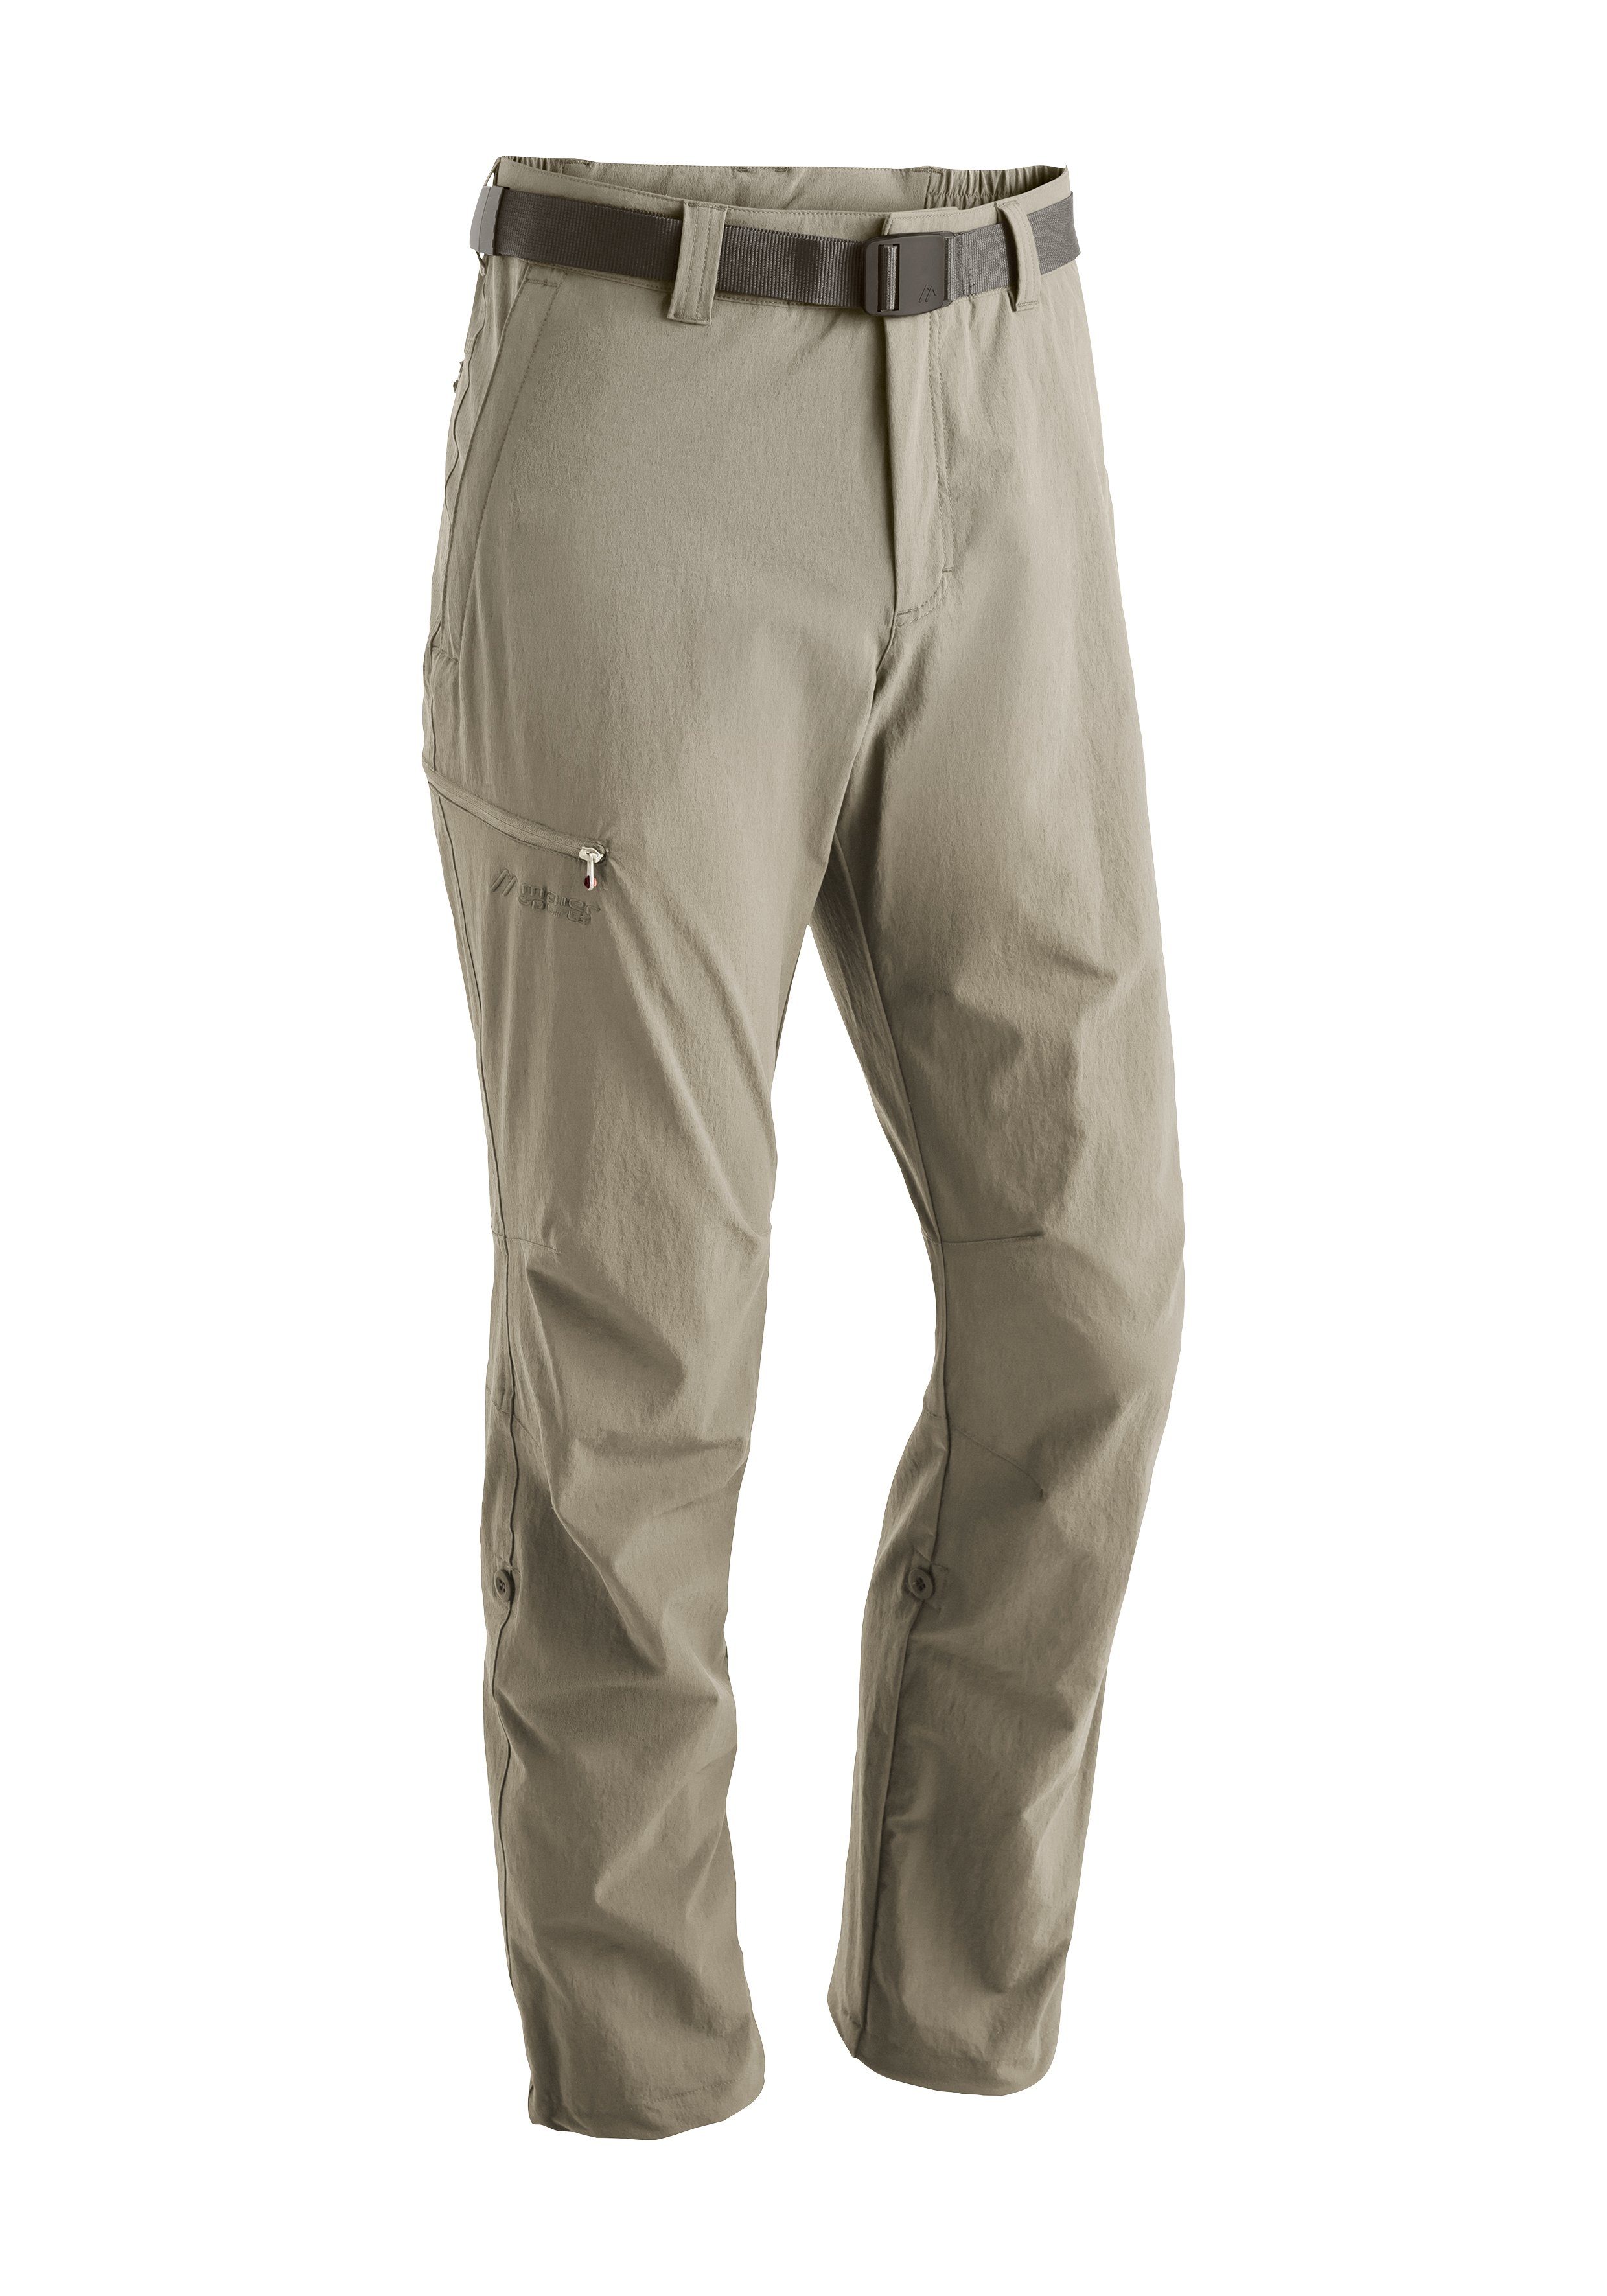 Maier Sports Funktionshose Nil Herren Wanderhose, atmungsaktive Outdoor-Hose mit Roll up Funktion beige | Outdoorhosen